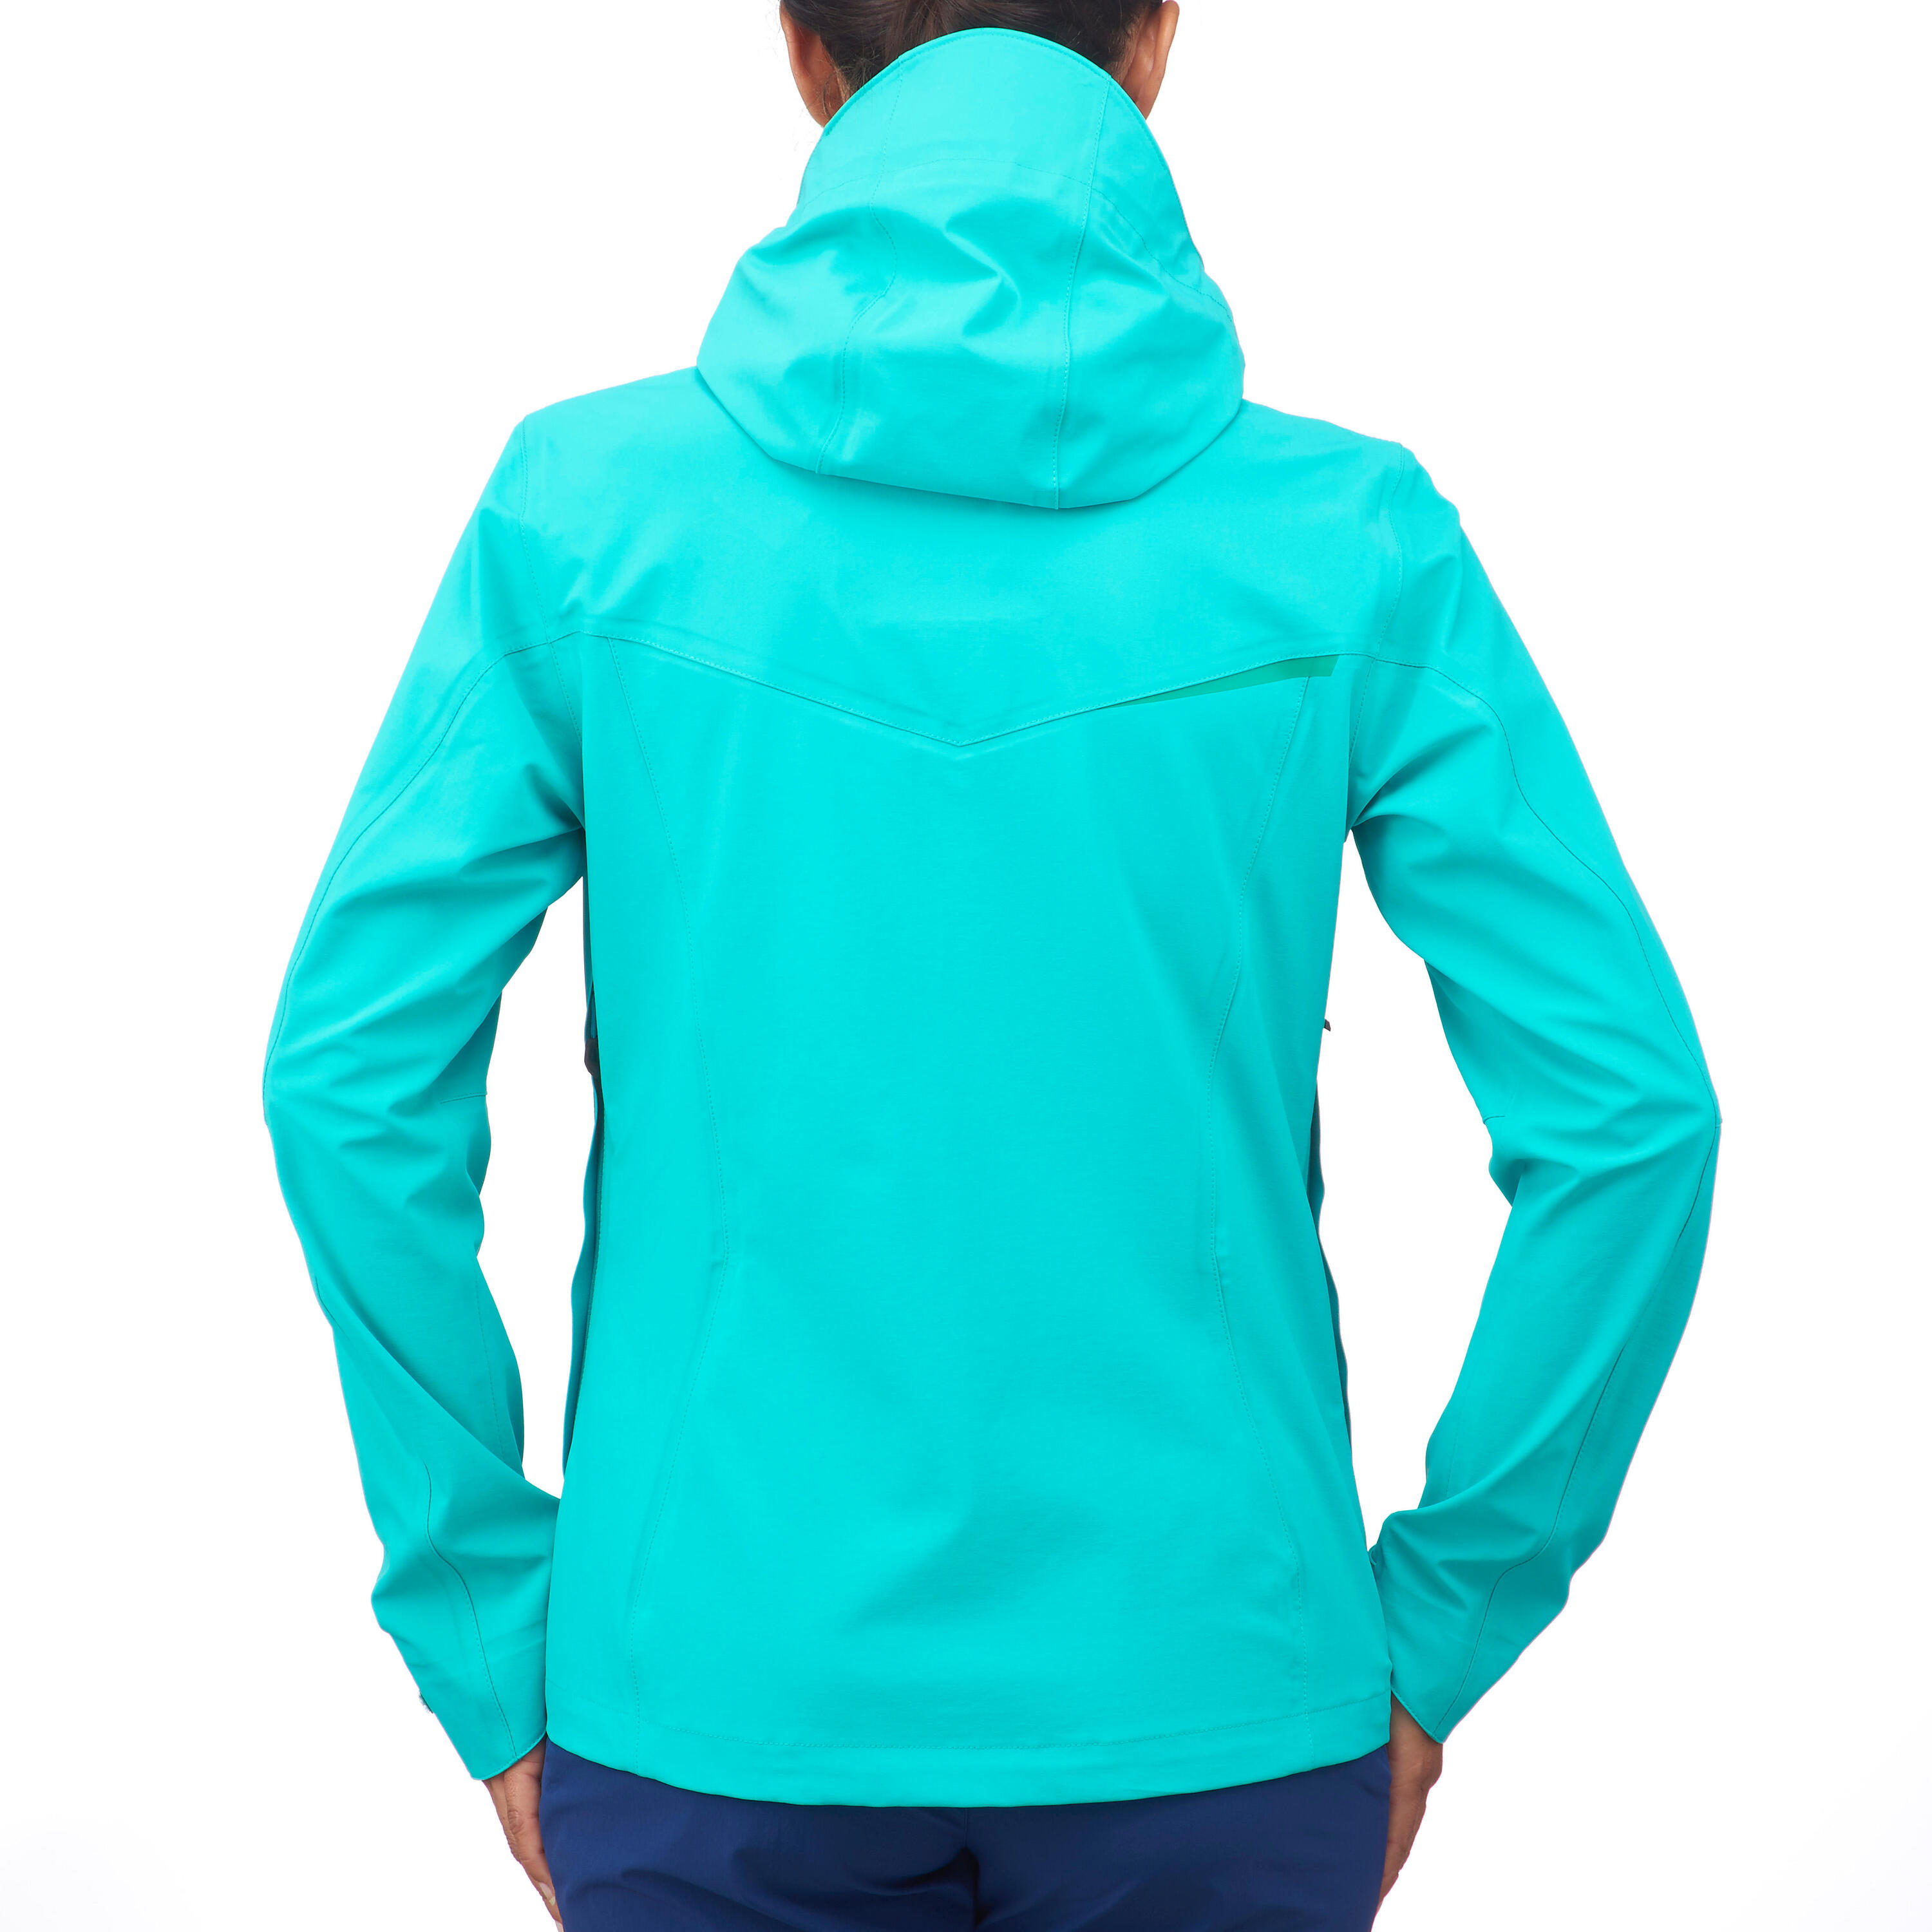 MH500 Women's Mountain Hiking Waterproof Jacket - Turquoise 5/17